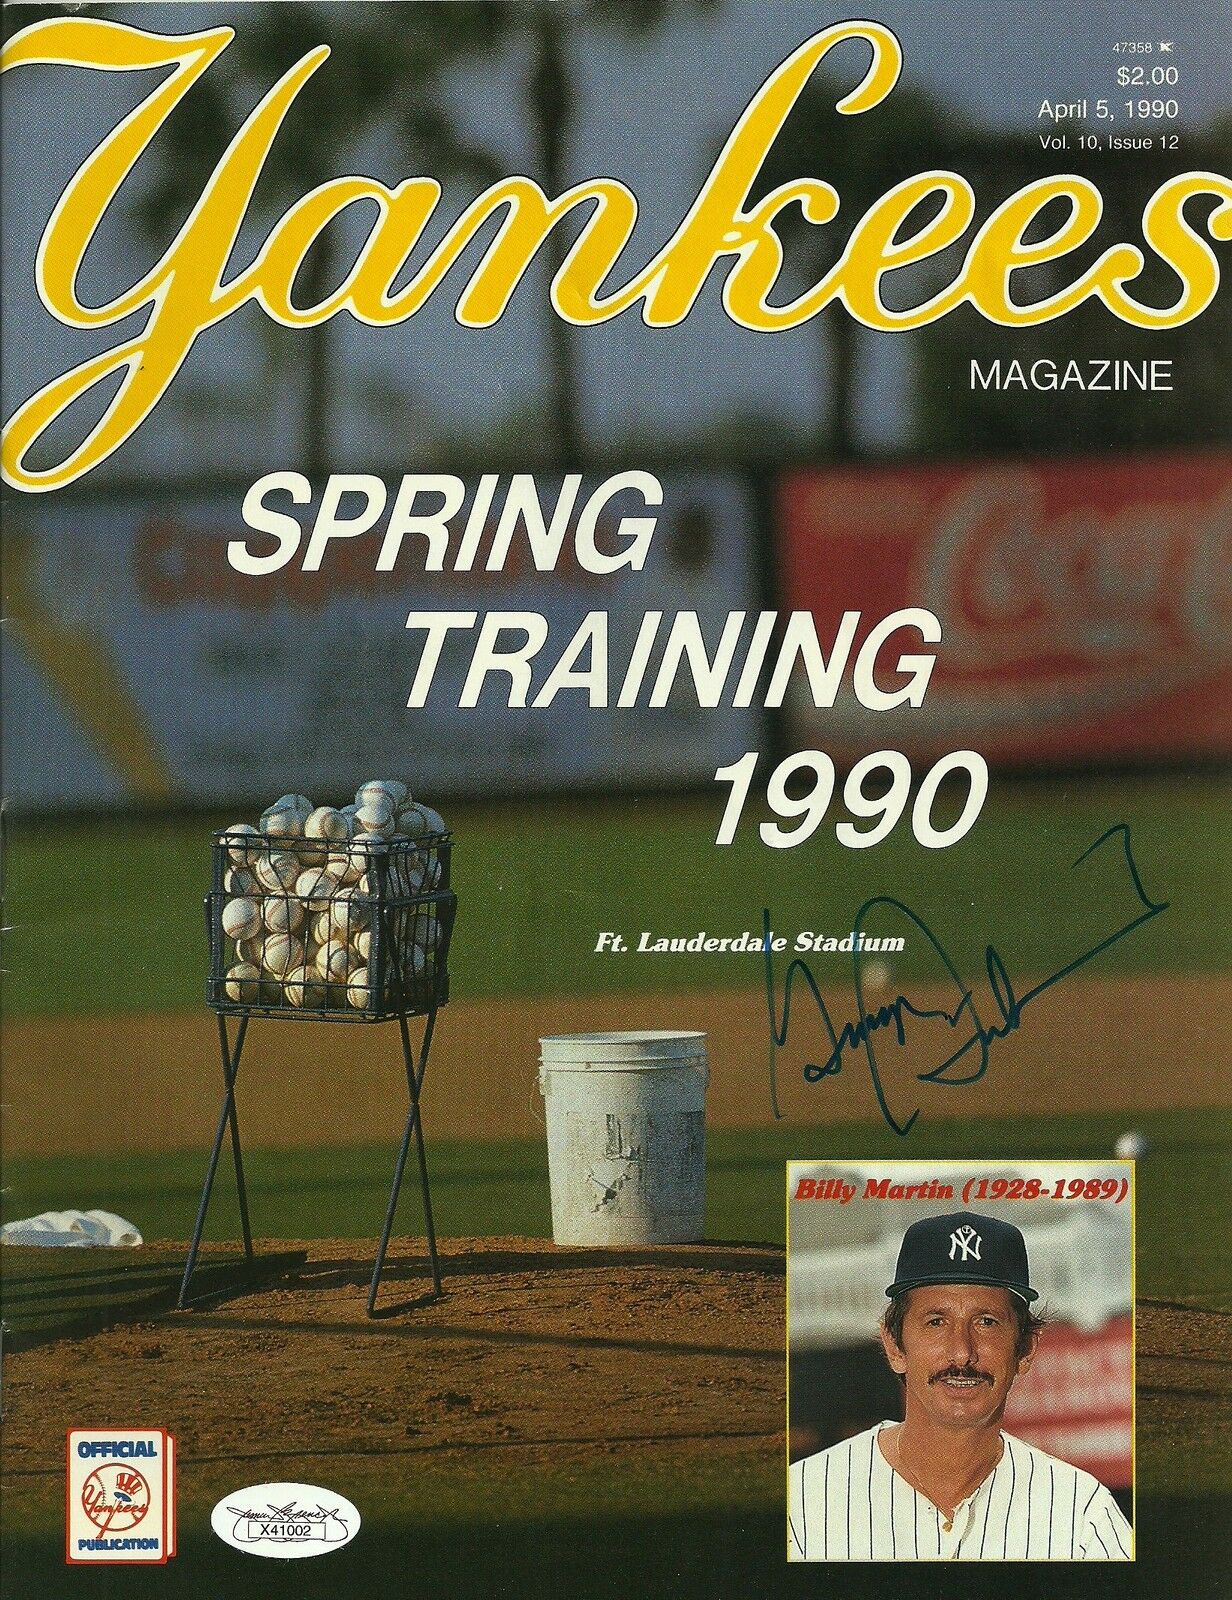 George Steinbrenner Autograph Auto 1990 Ny Yankees Spring Training Program - Jsa